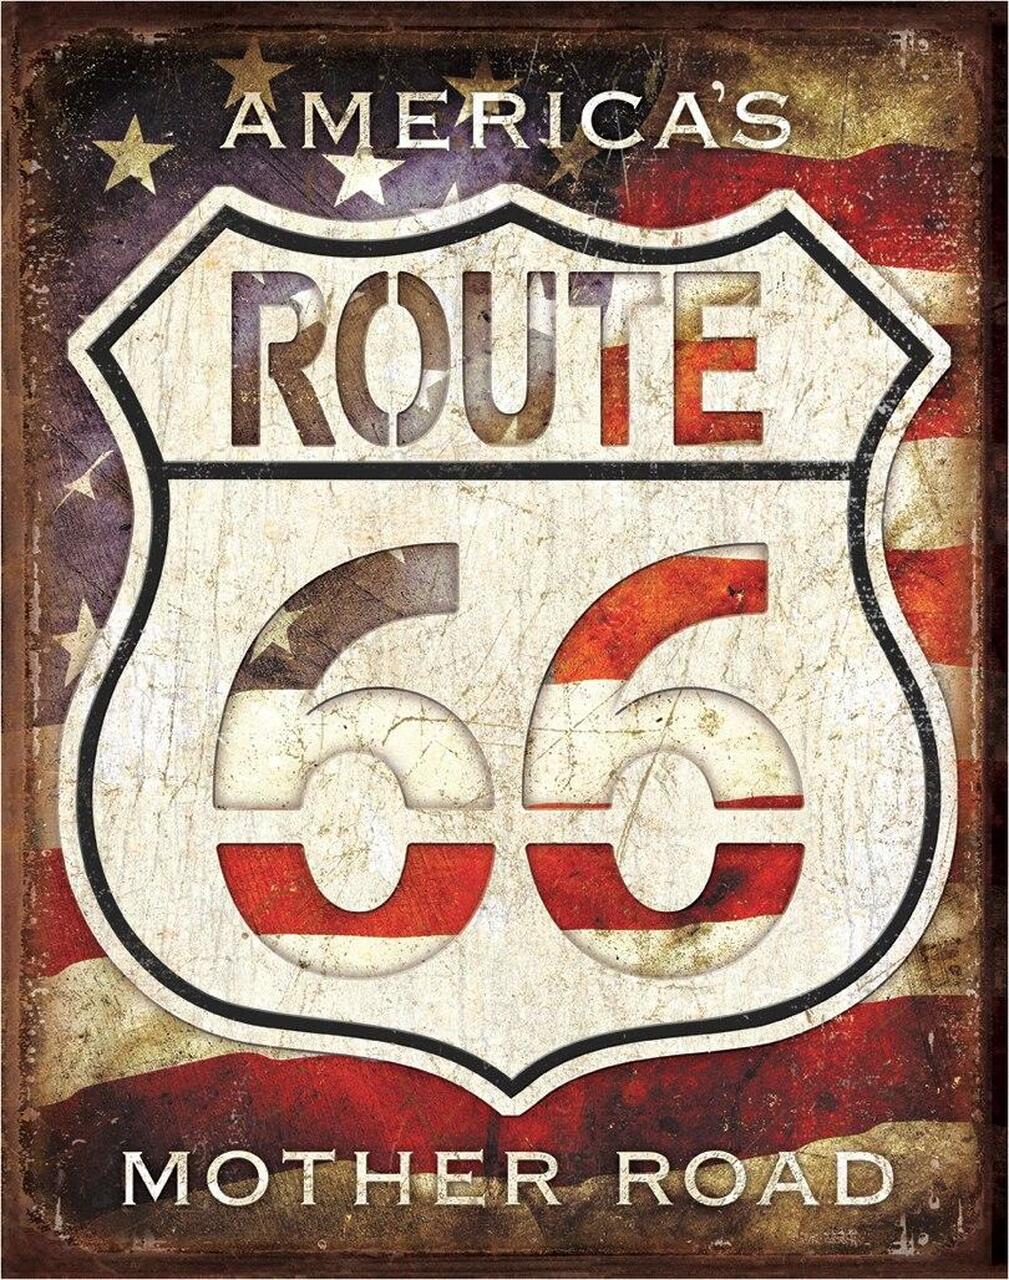 DESP-2104-route-66-americas-road